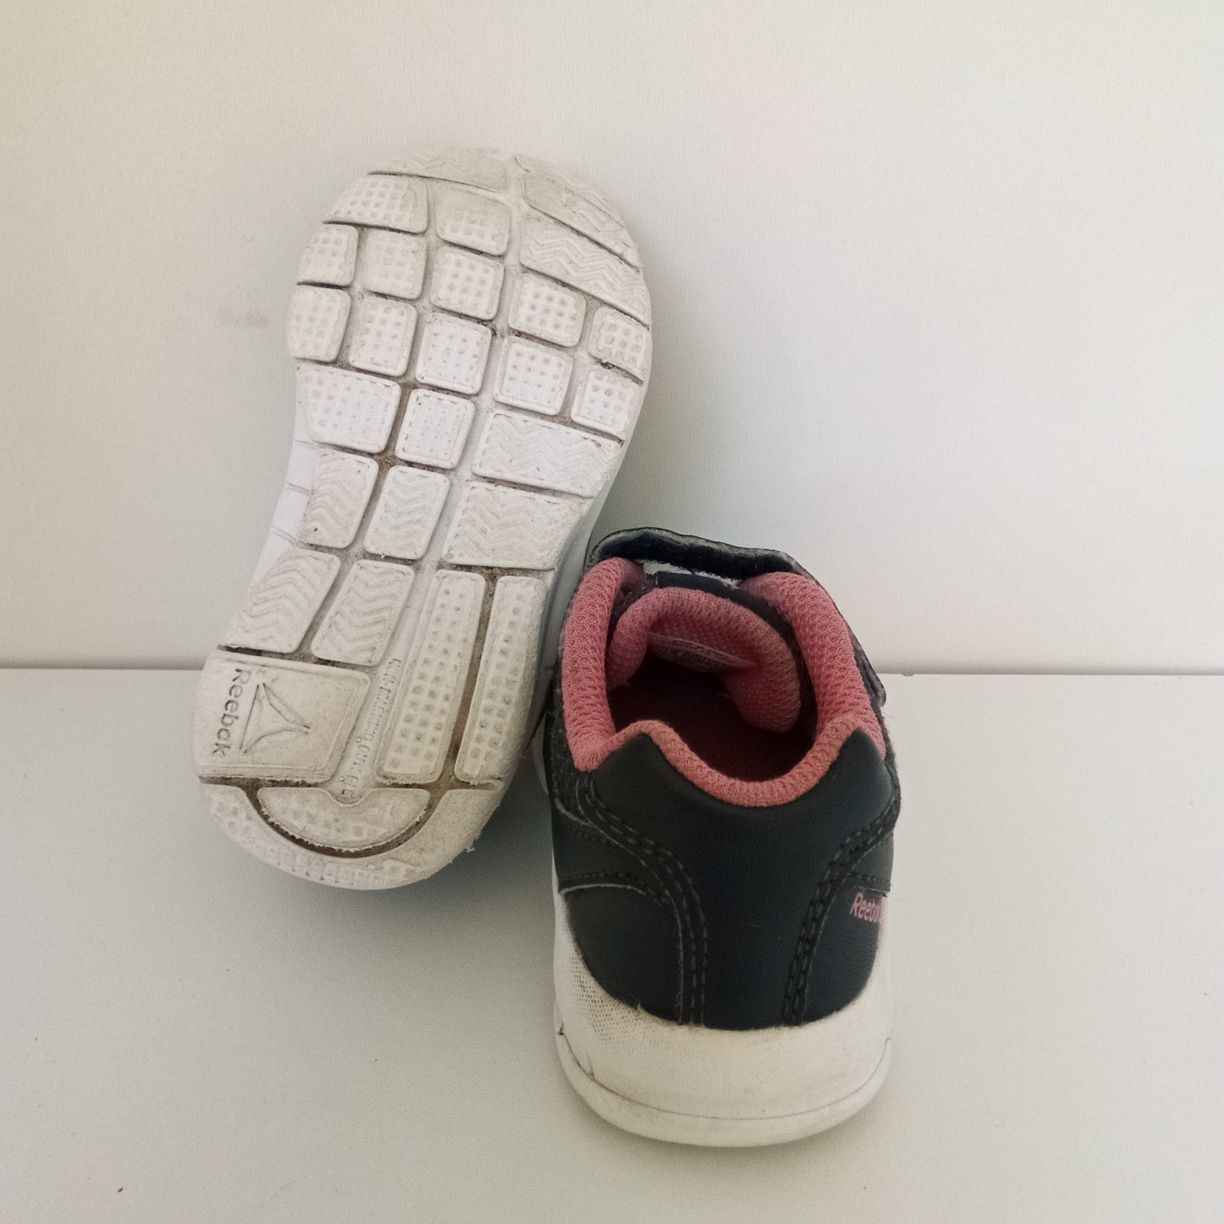 Buty dziecięce Reebok Rush Runner Syn Al rozmiar 20 wkładka 13,3 cm